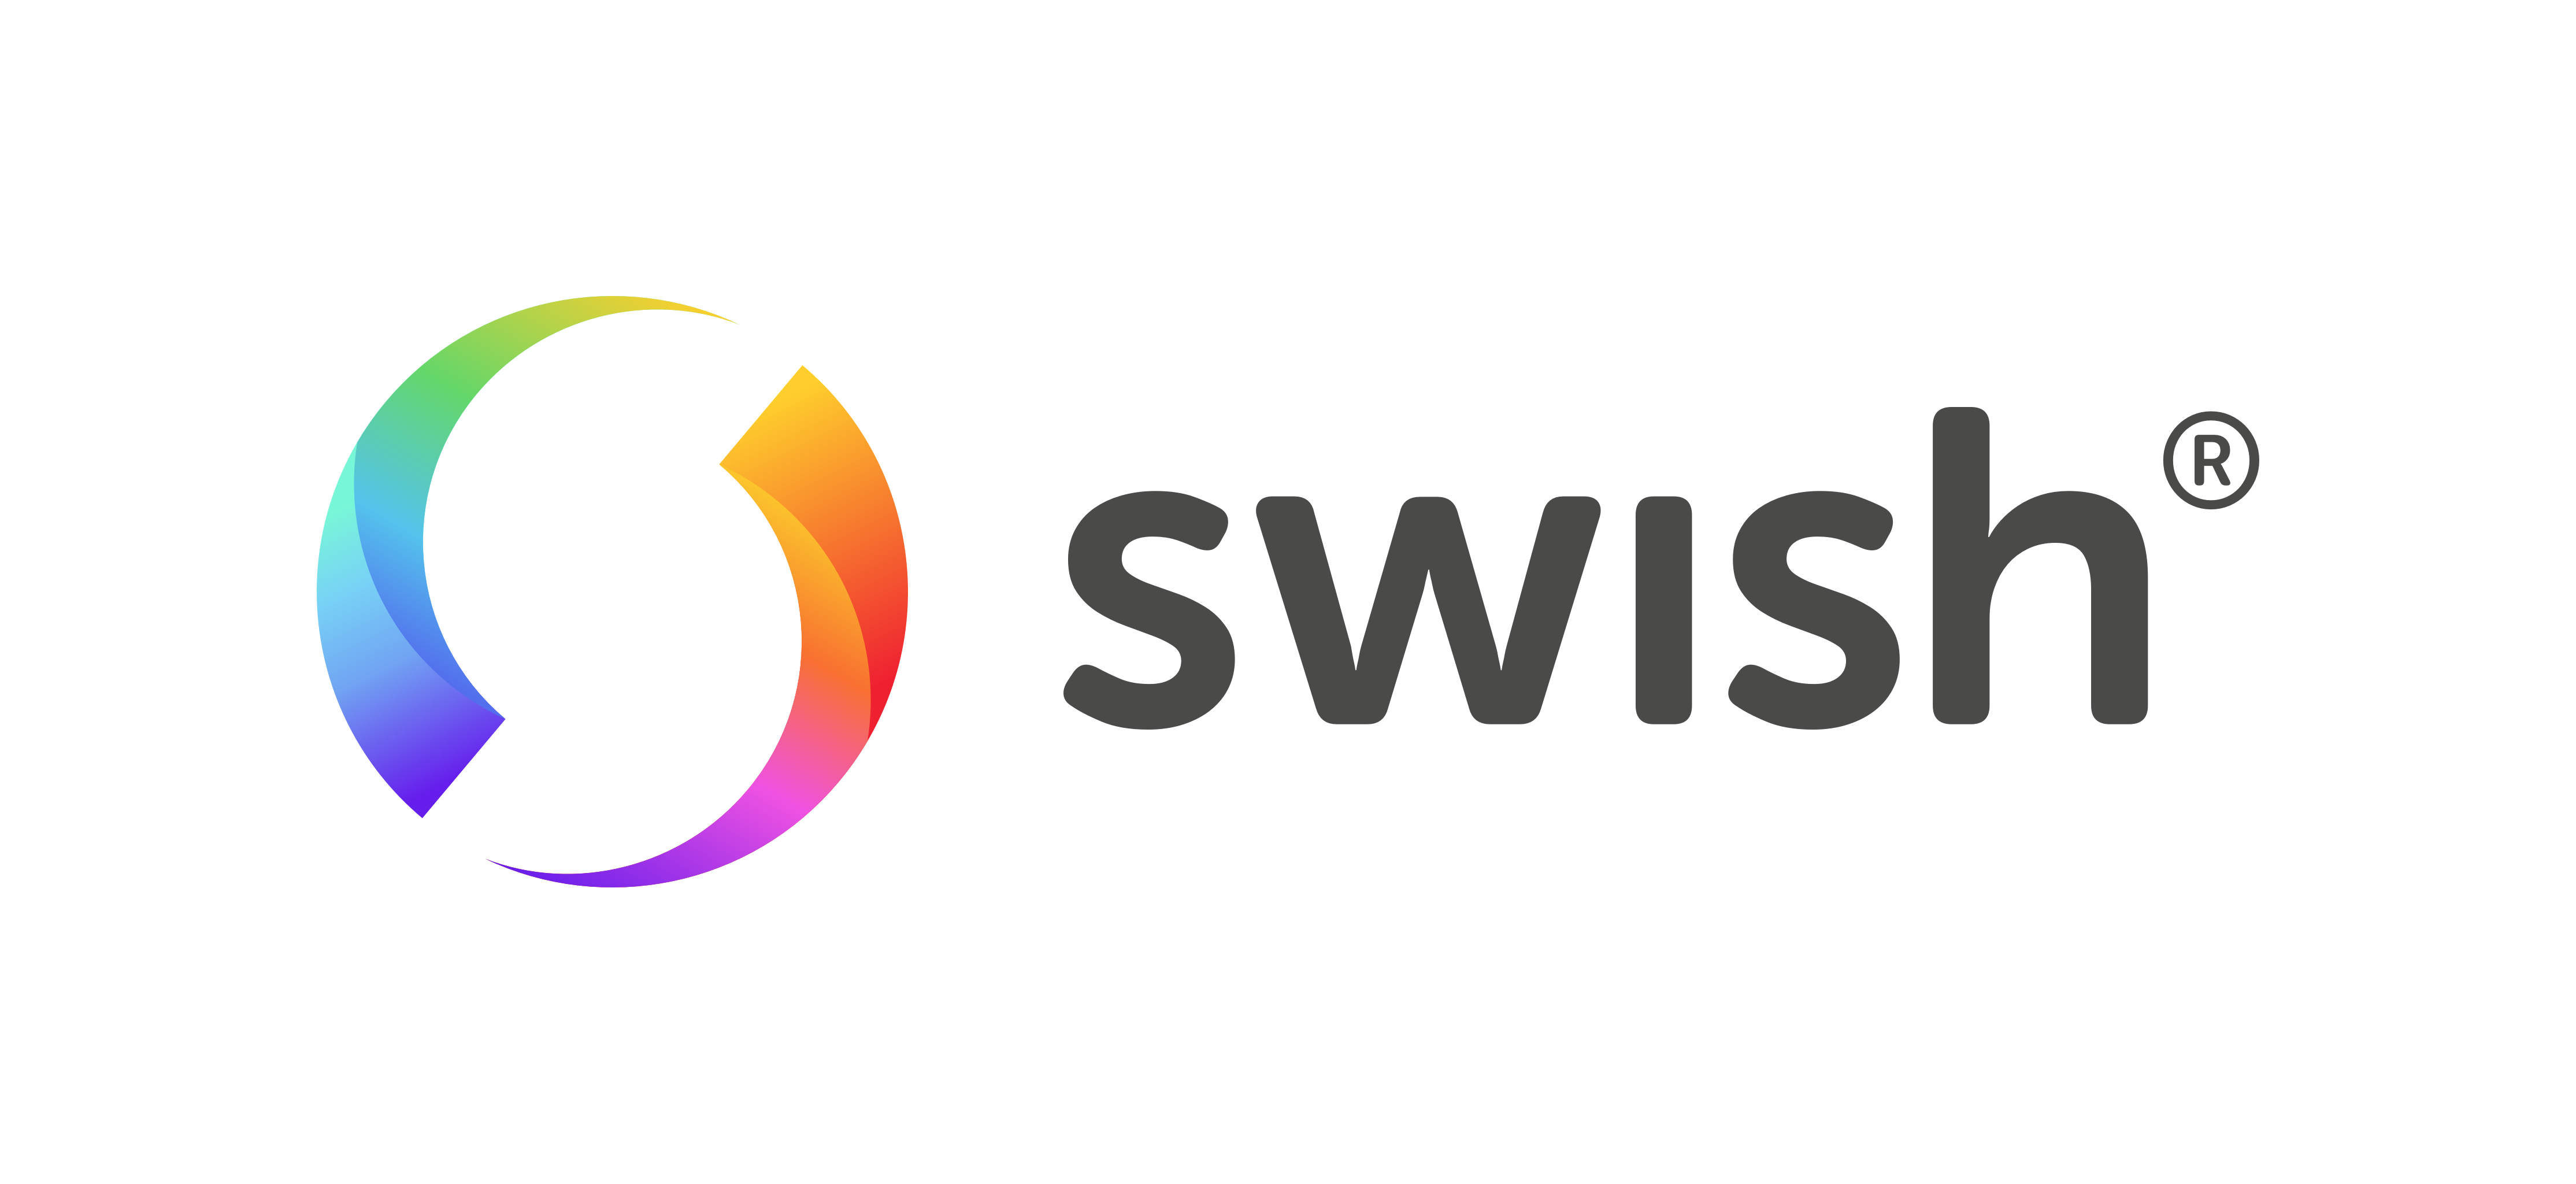 Logo Swish